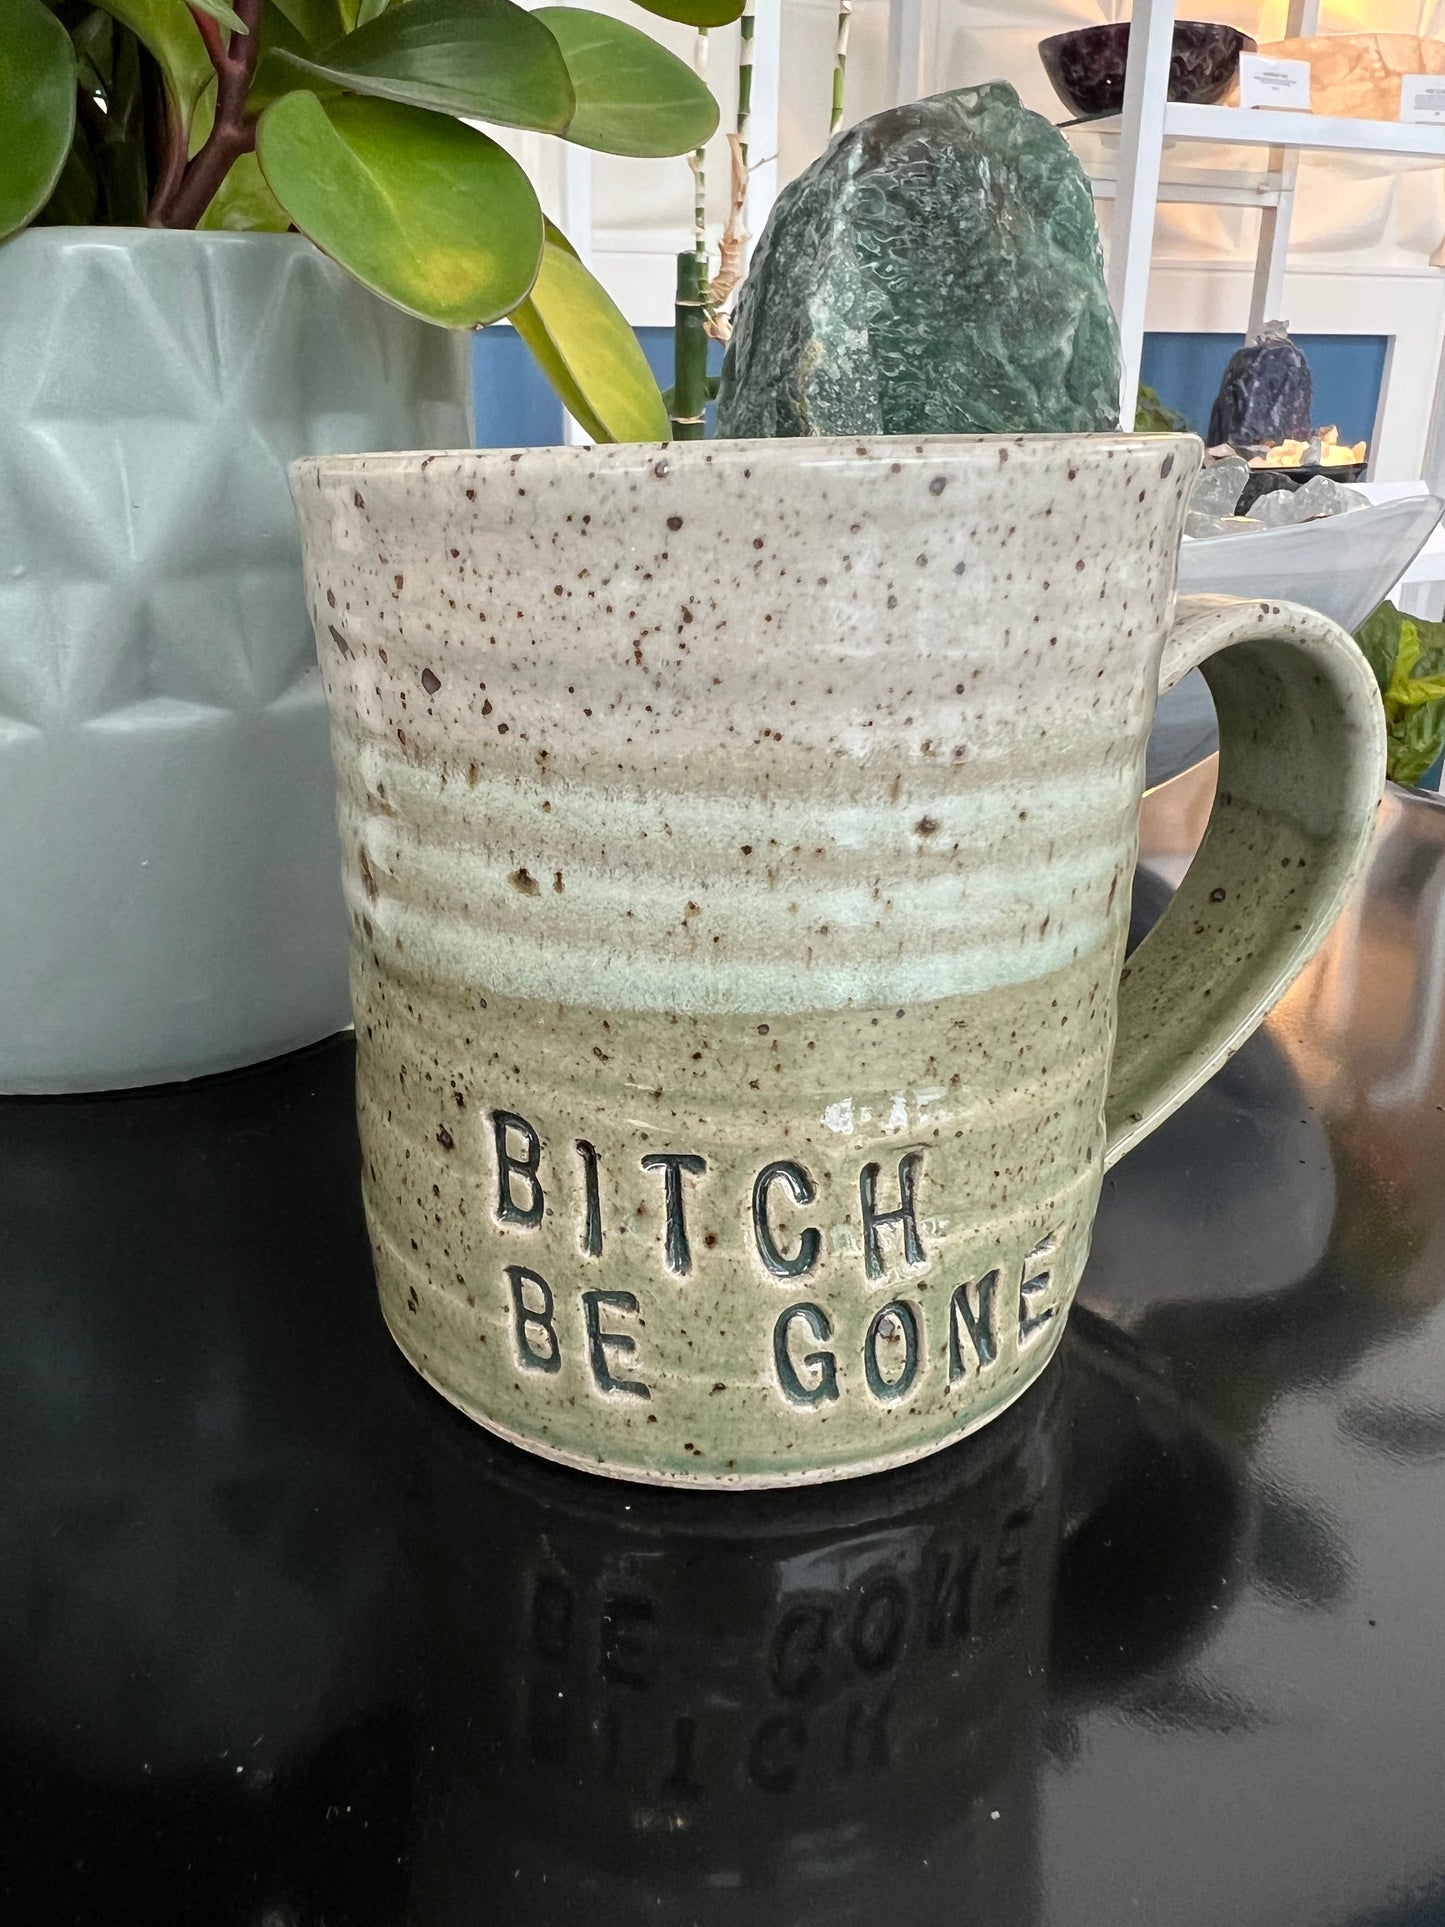 "Bitch Be Gone" Coffee Mugs